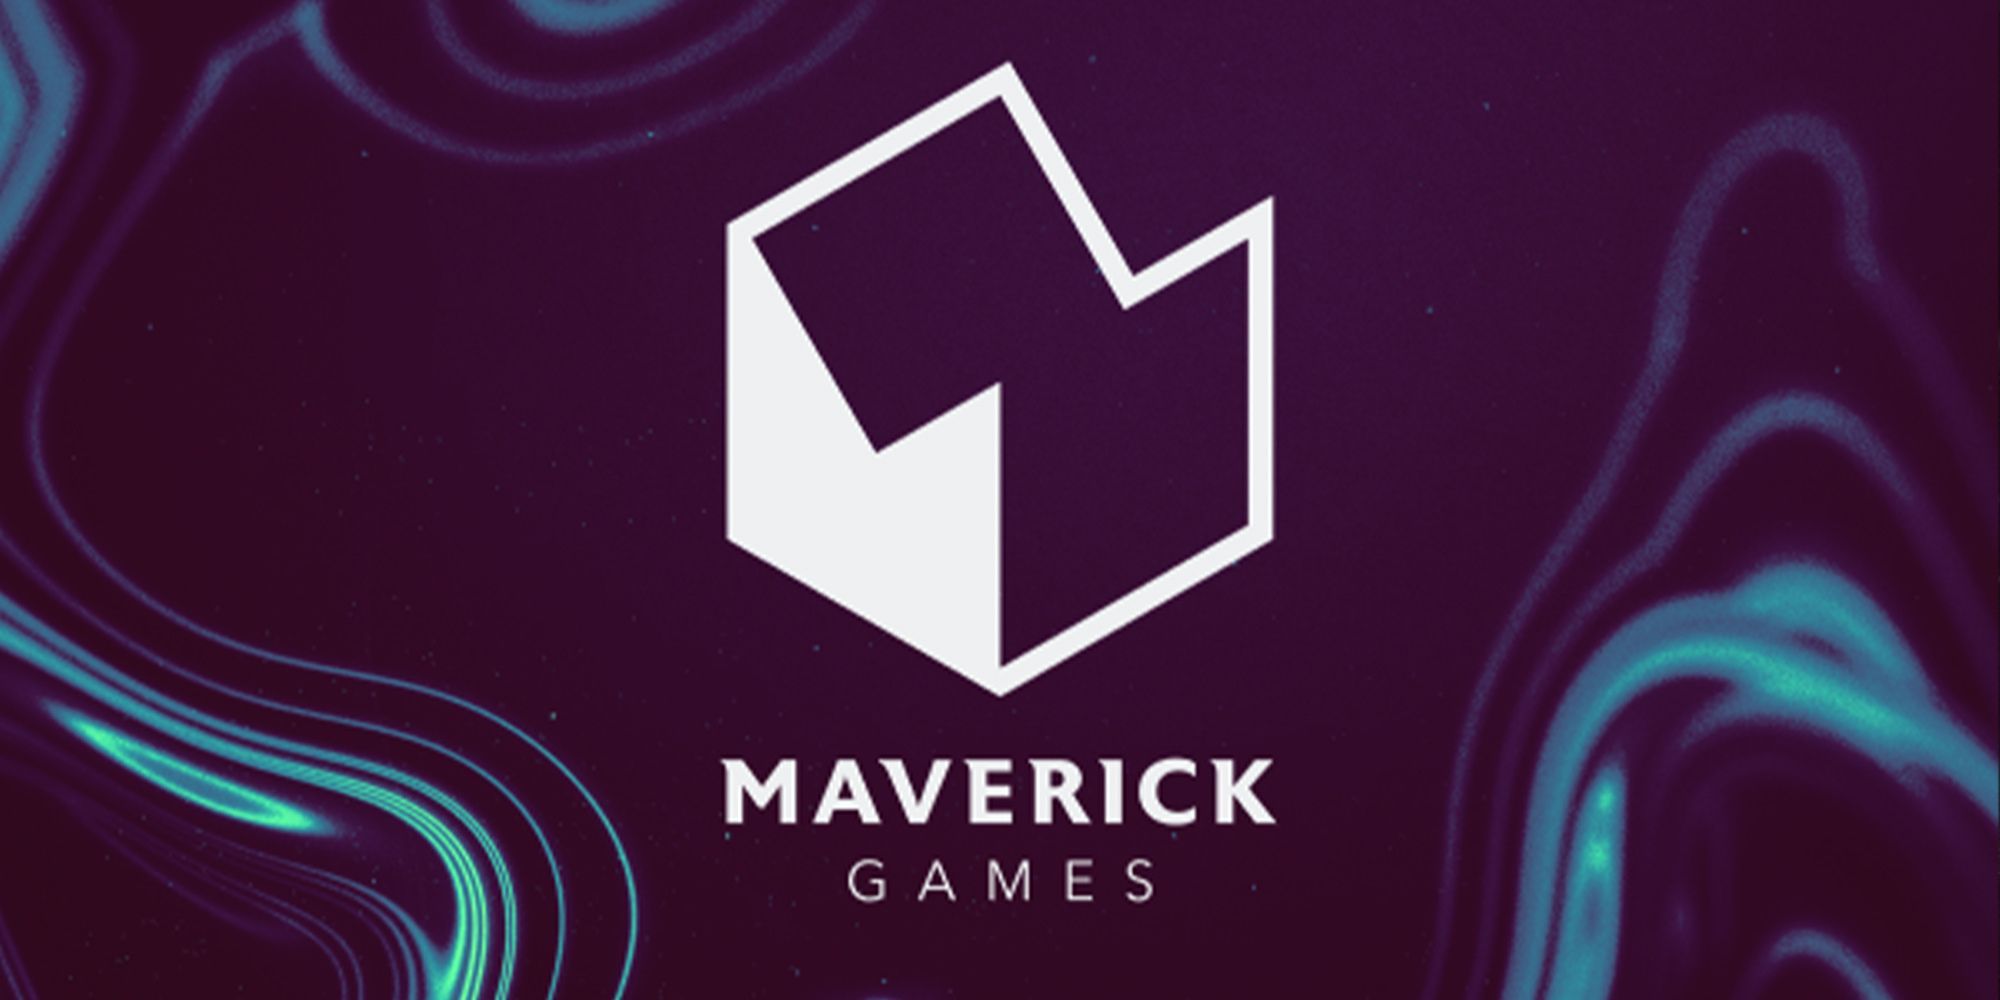 Maverick Games